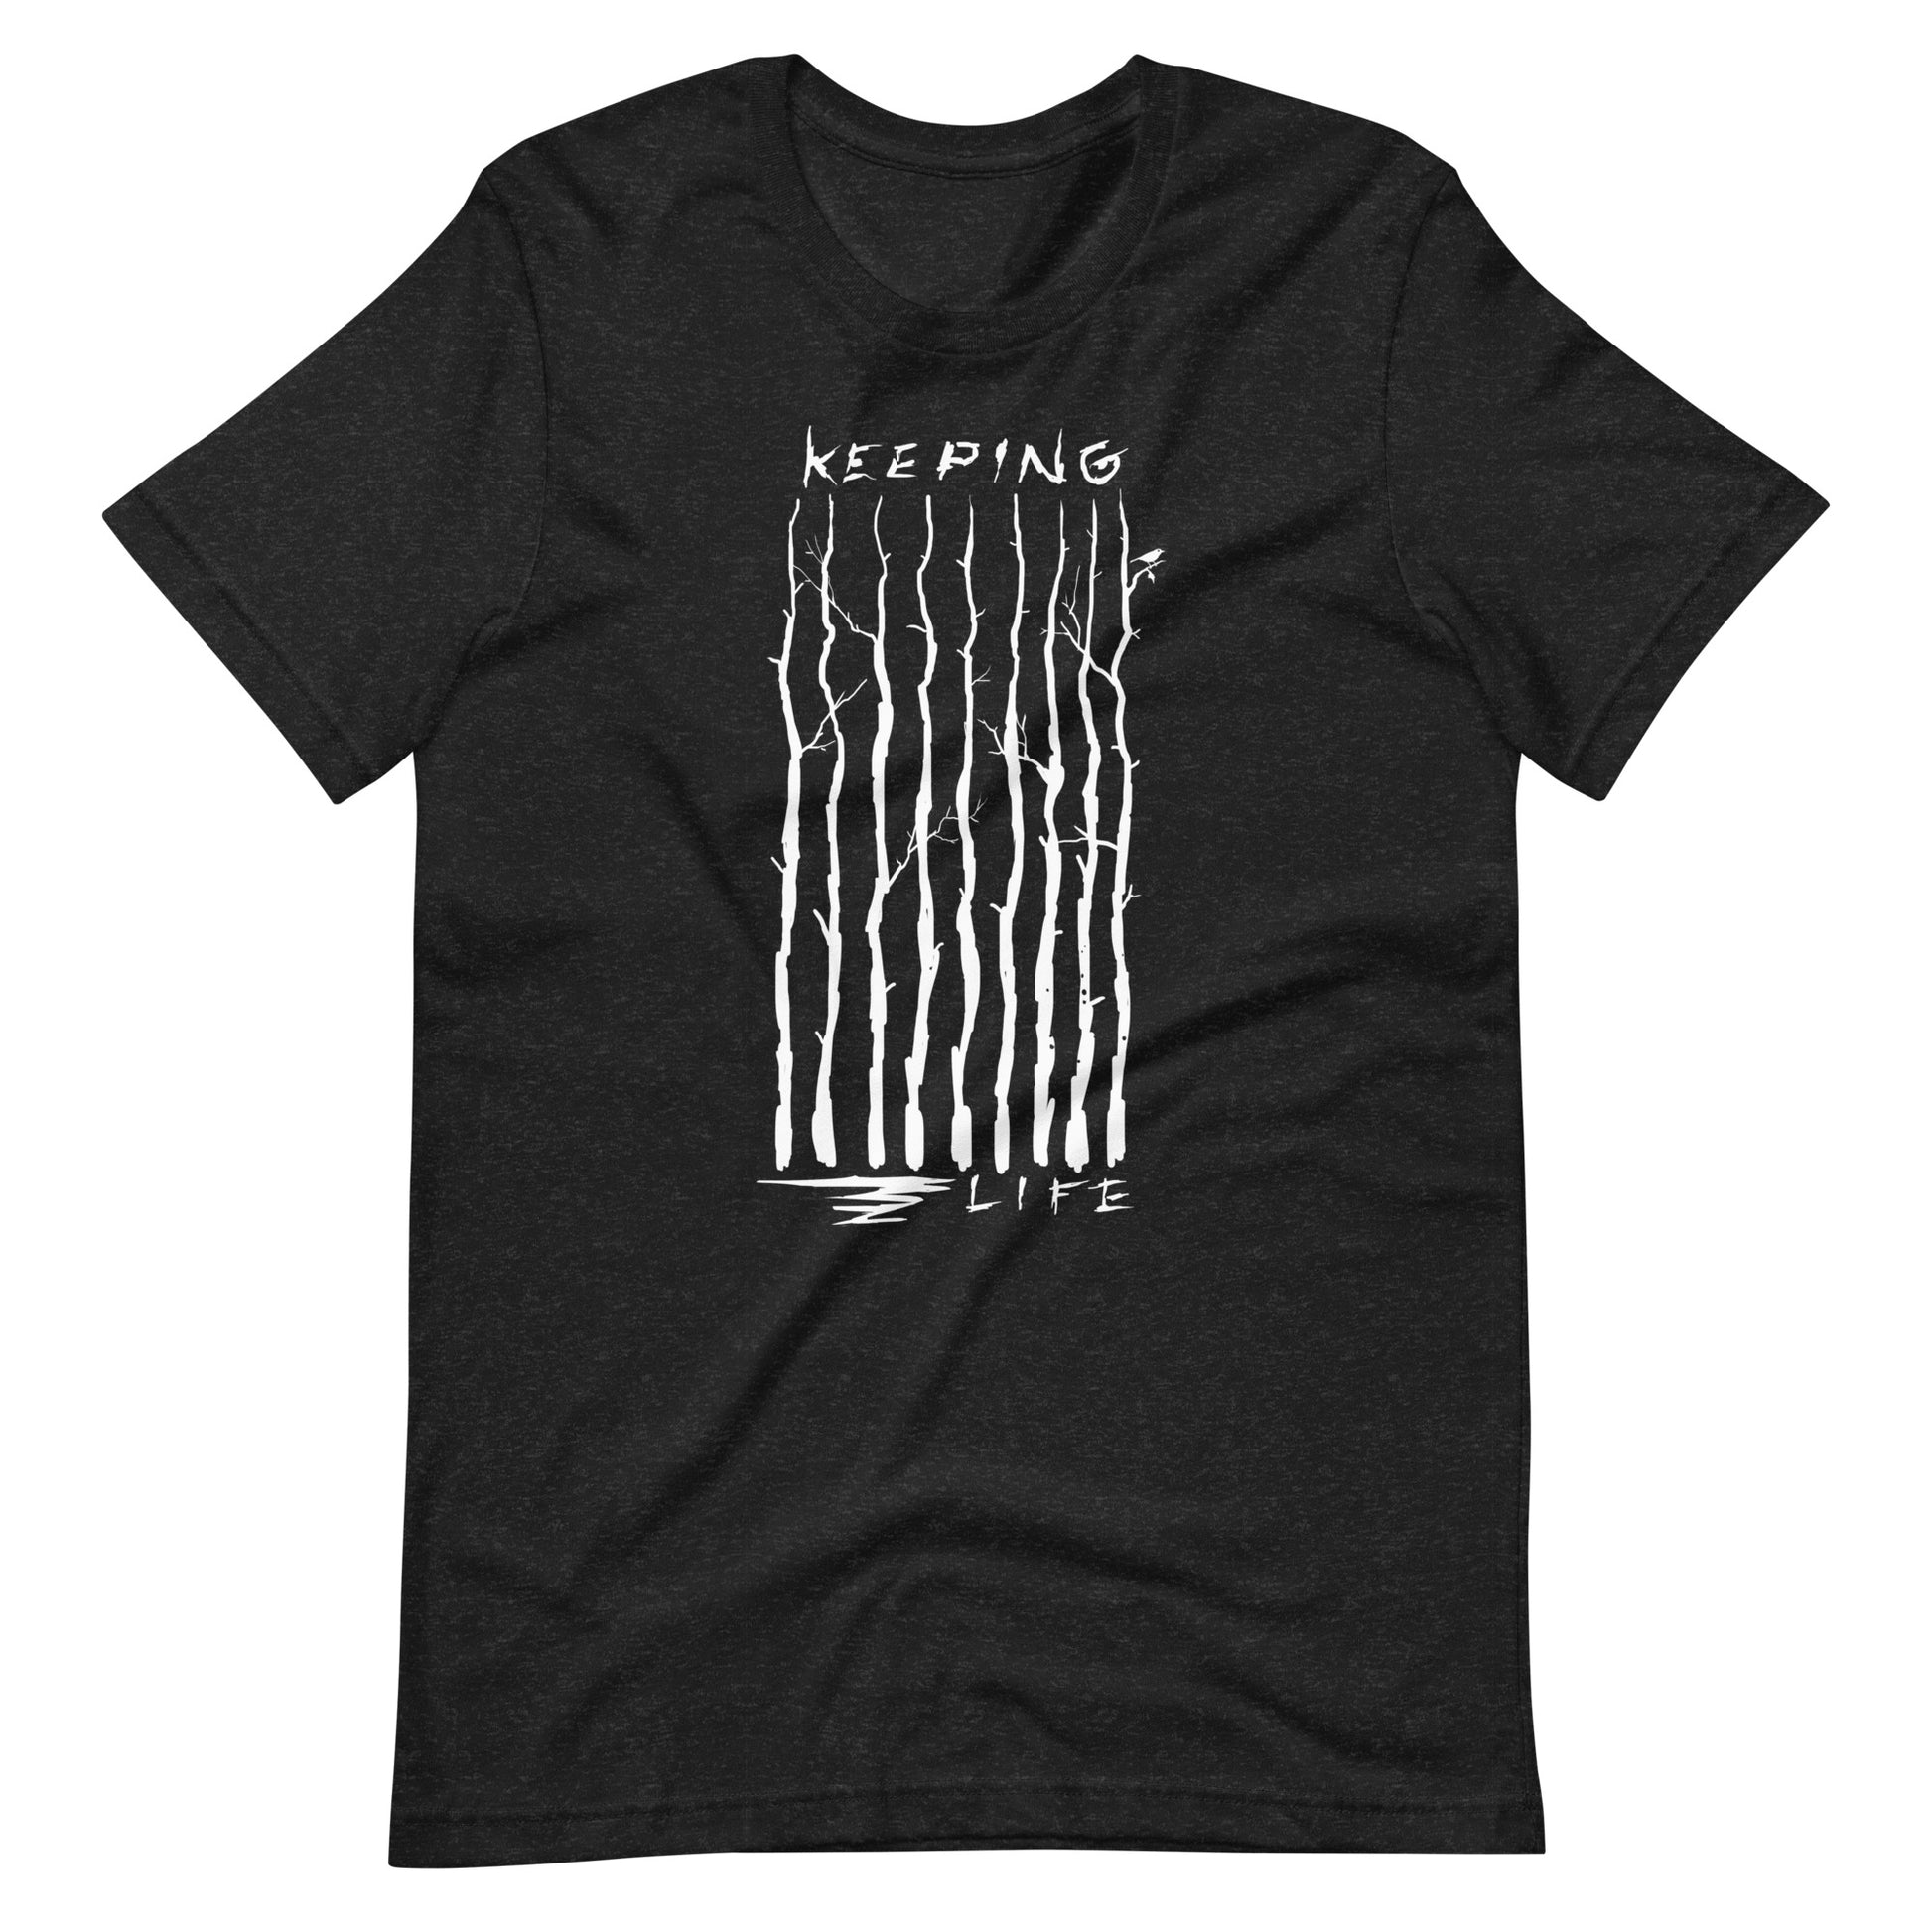 Keeping Lift - Men's t-shirt - Black Heather Front